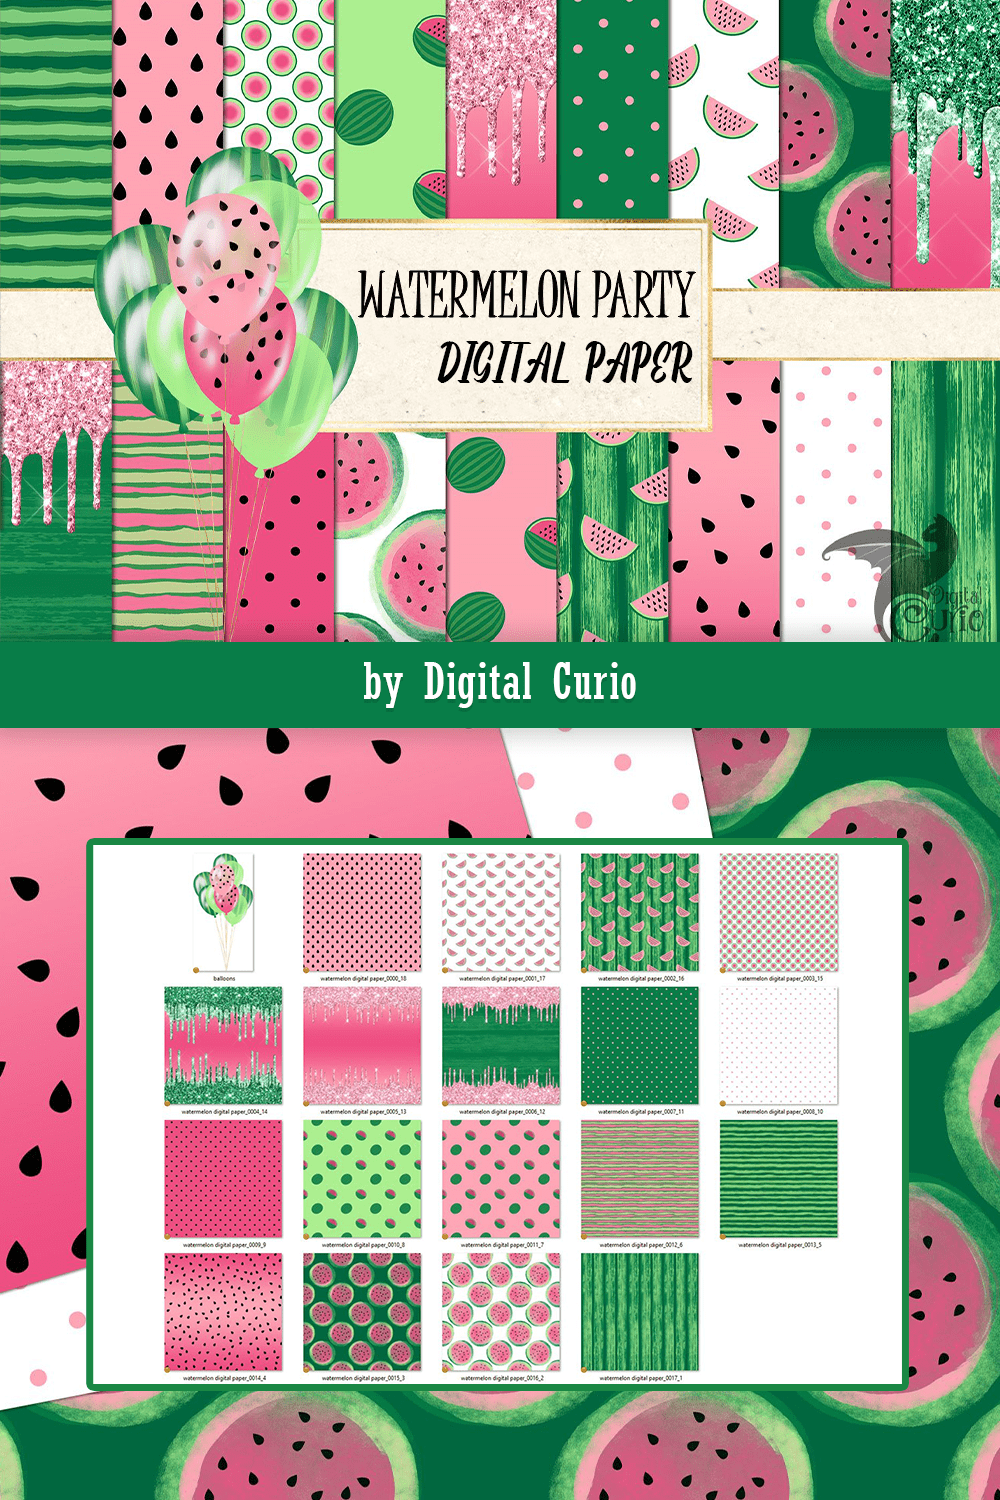 Watermelon party digital paper - pinterest image preview.